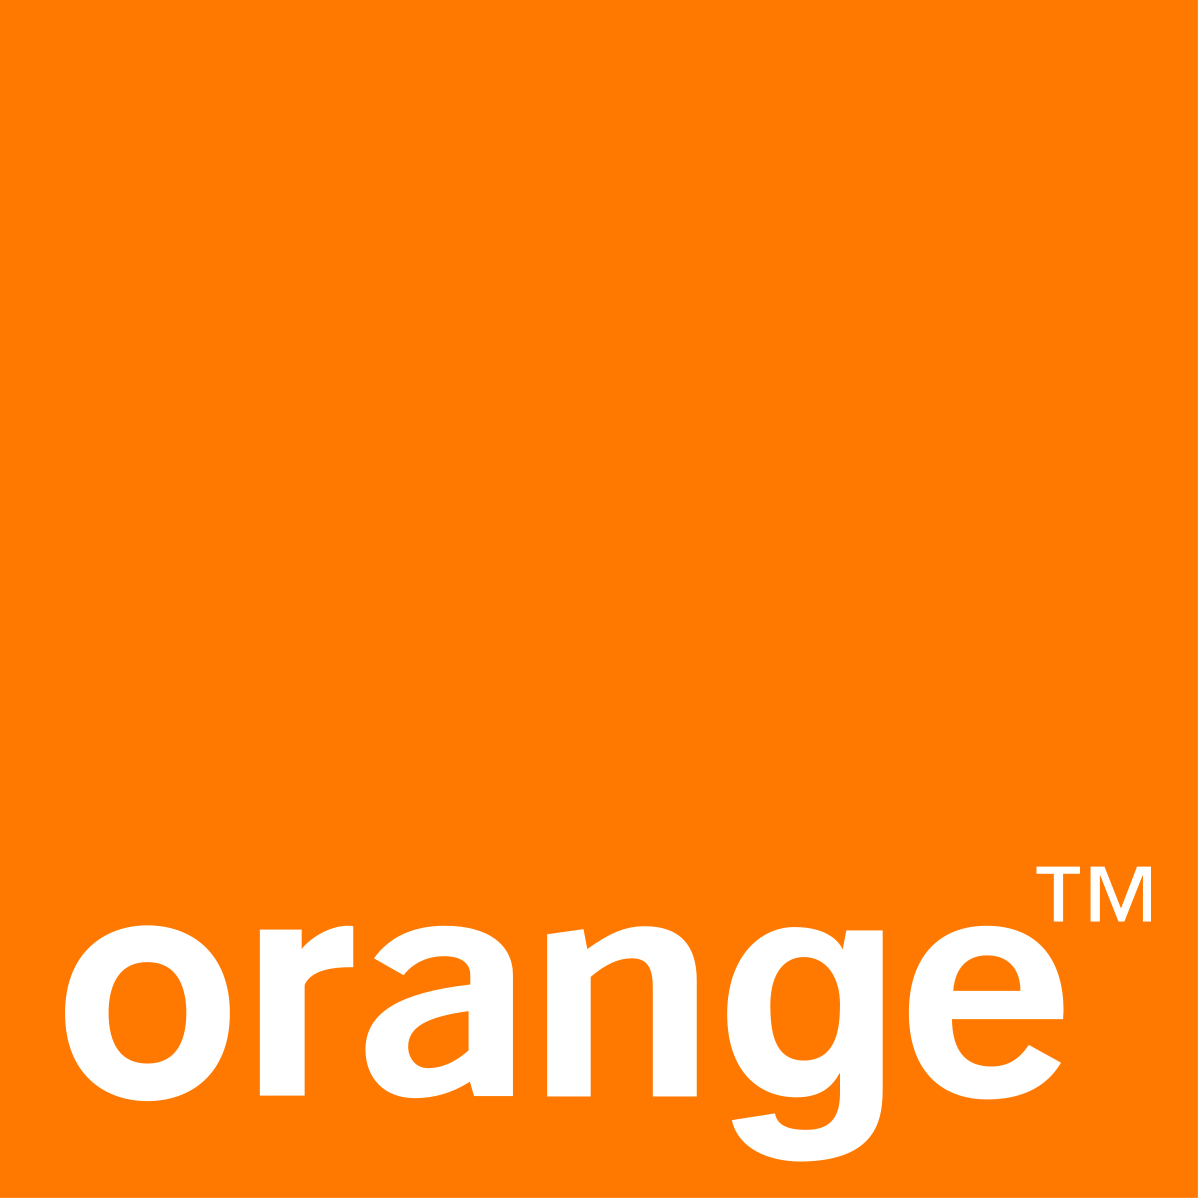 Orange (España) - Wikipedia, la enciclopedia libre